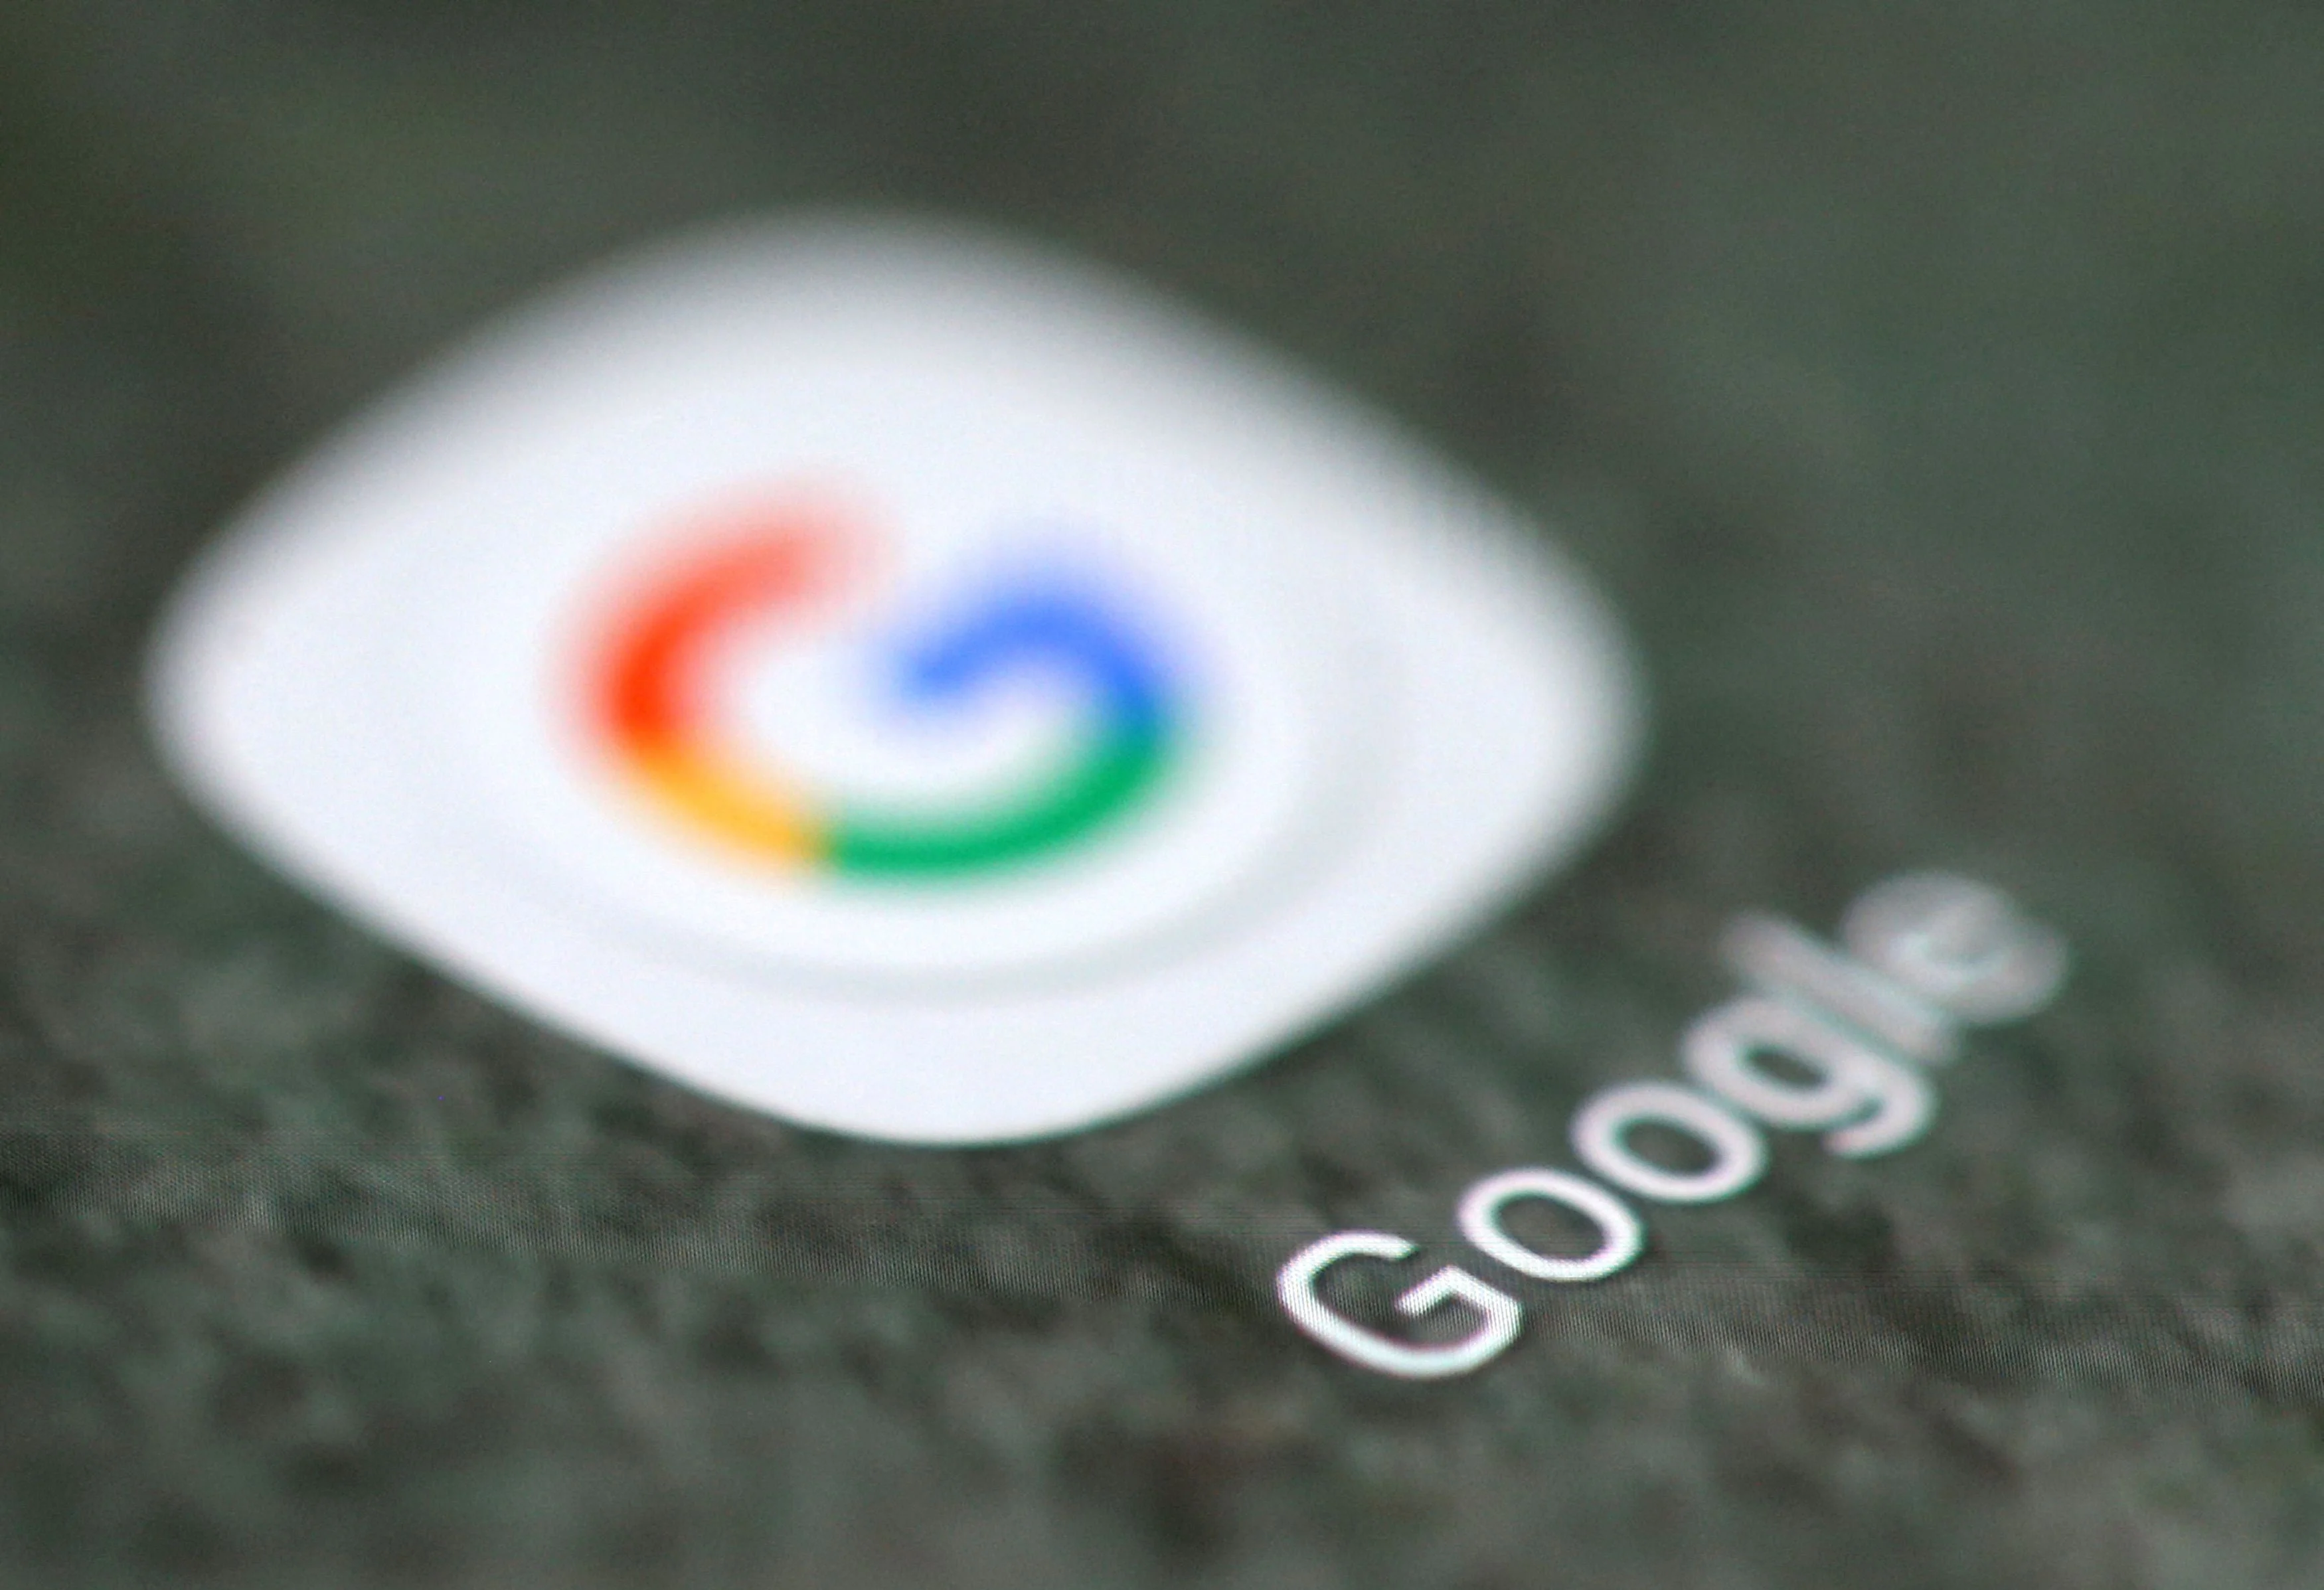 Google is permanently ending Google Talk